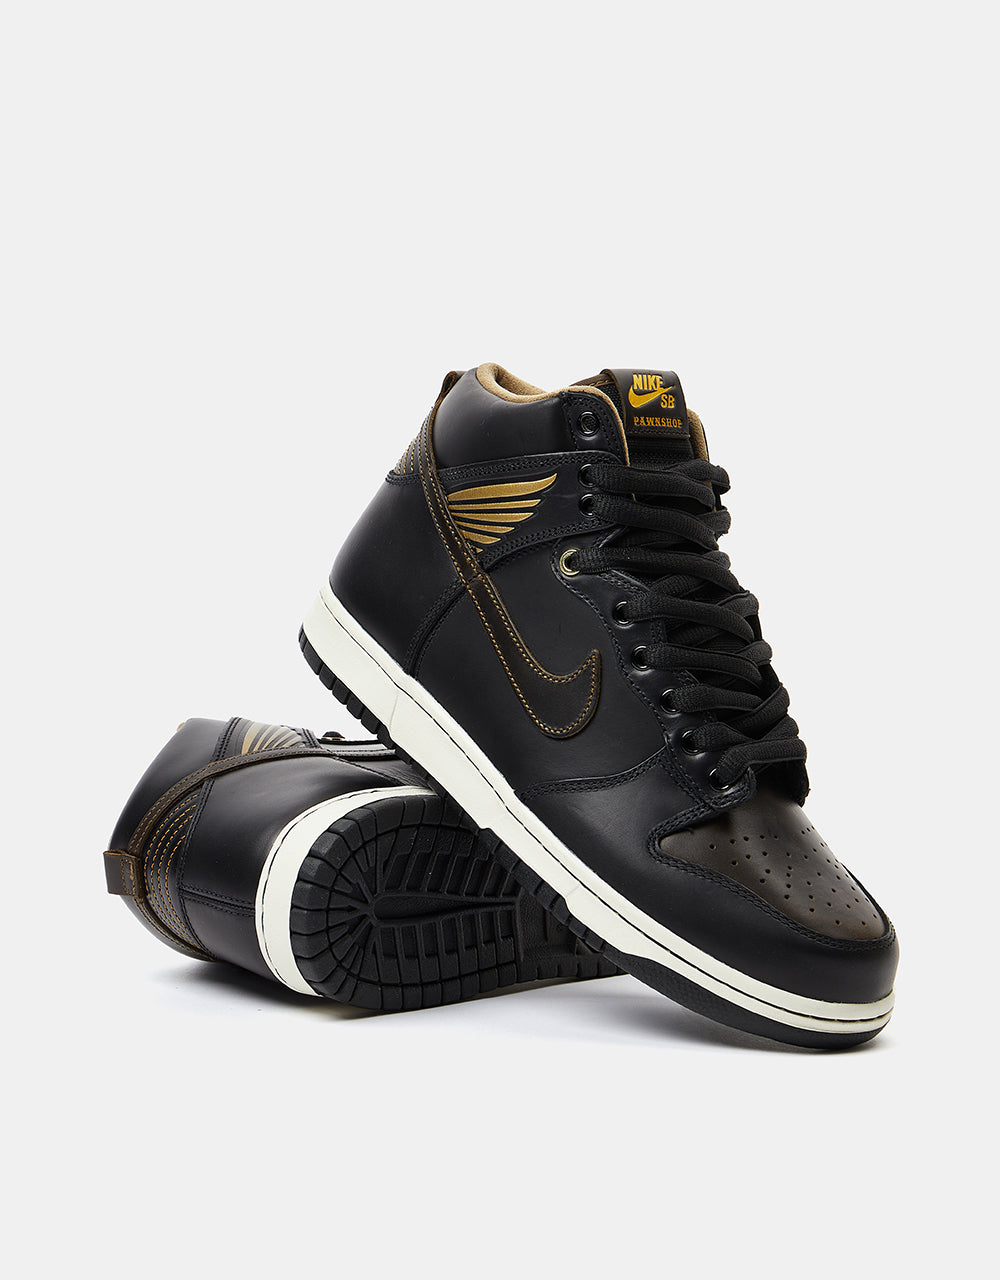 Nike SB 'Pawnshop' Dunk High OG QS Skate Shoes - Black/Black-Metallic Gold